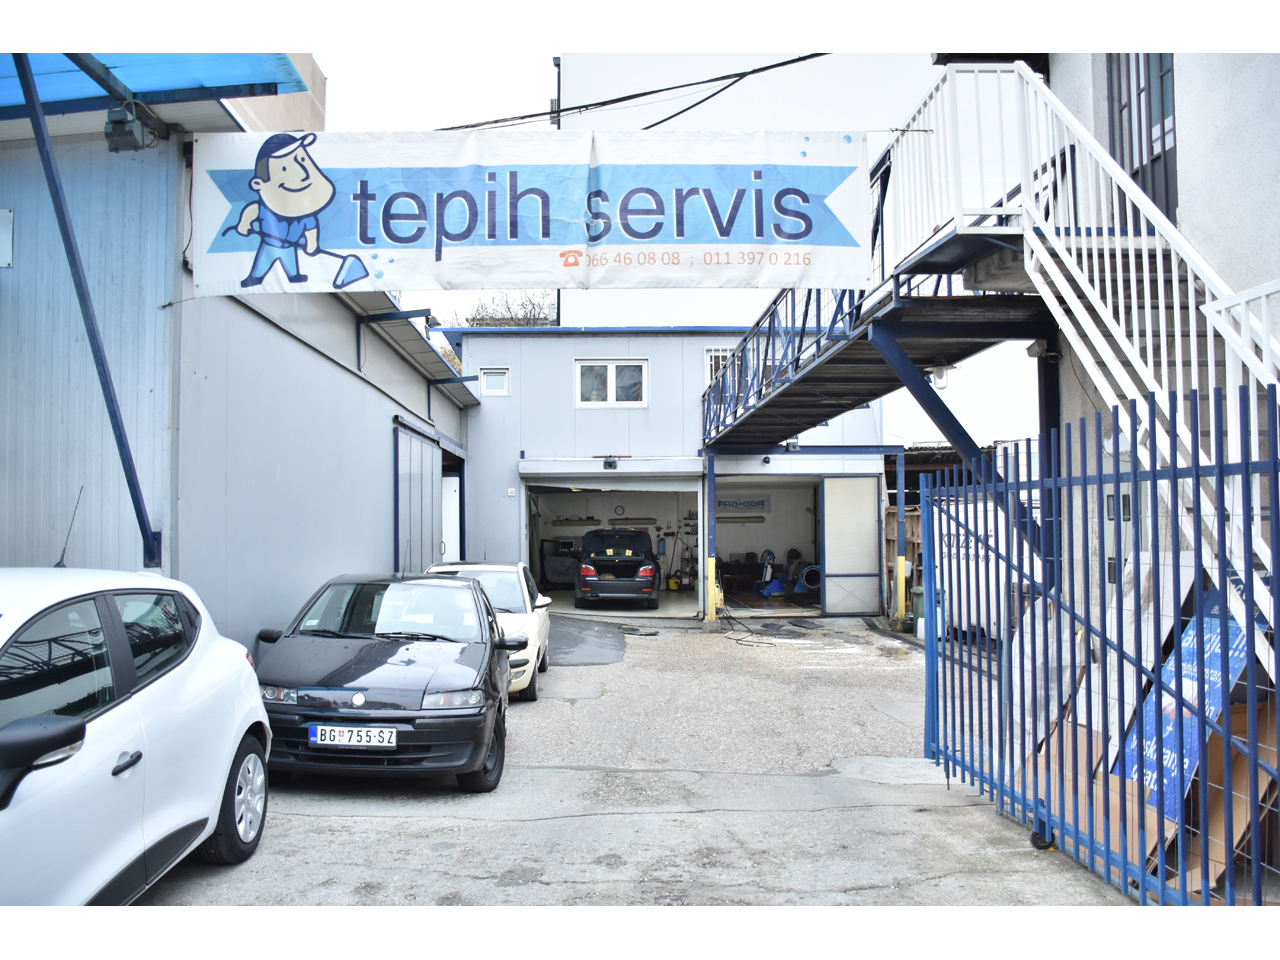 Slika 2 - CAKUM PAKUM TEPIH SERVIS Tepih servisi Beograd